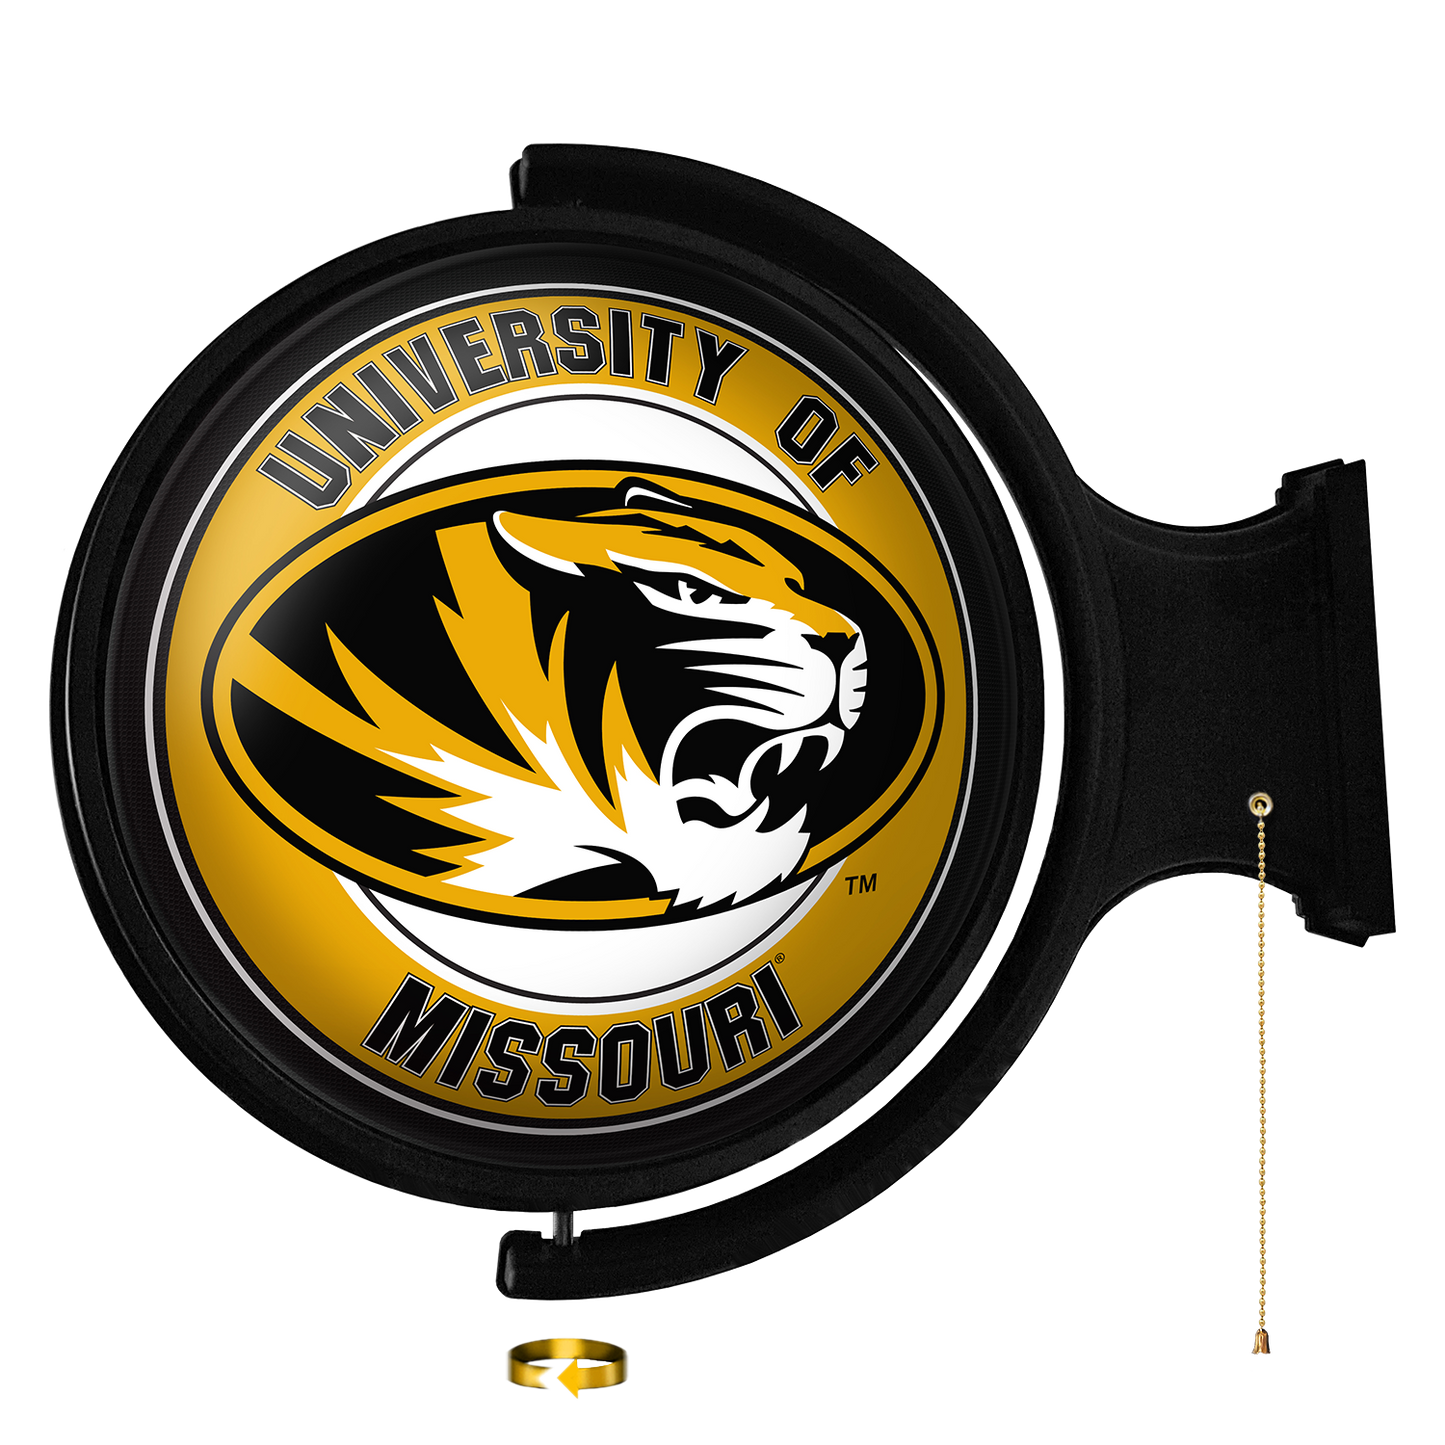 Missouri Tigers Round Rotating Wall Sign